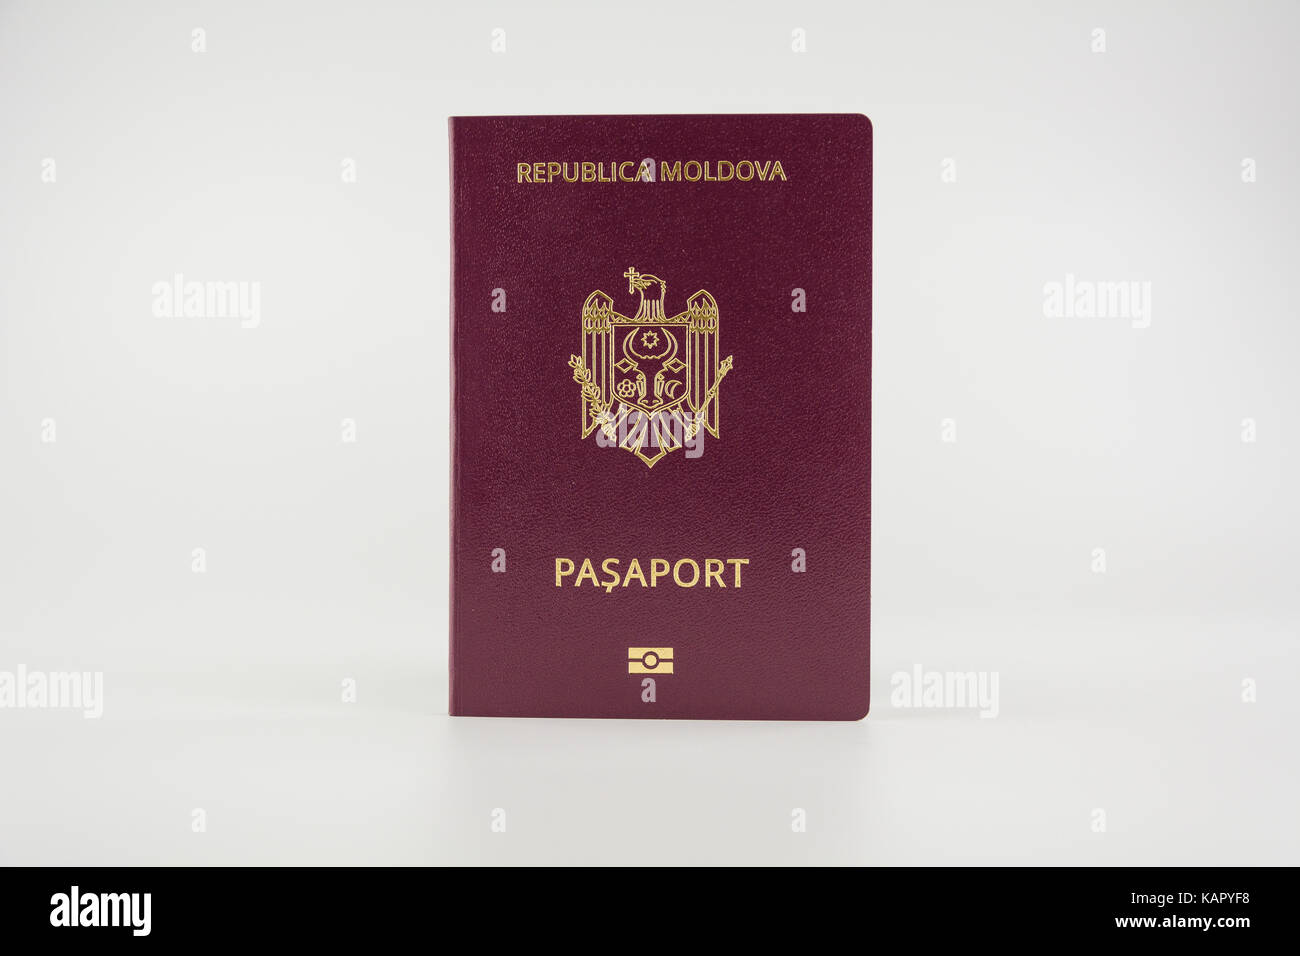 Passport of a citizen of Moldova Stock Photo